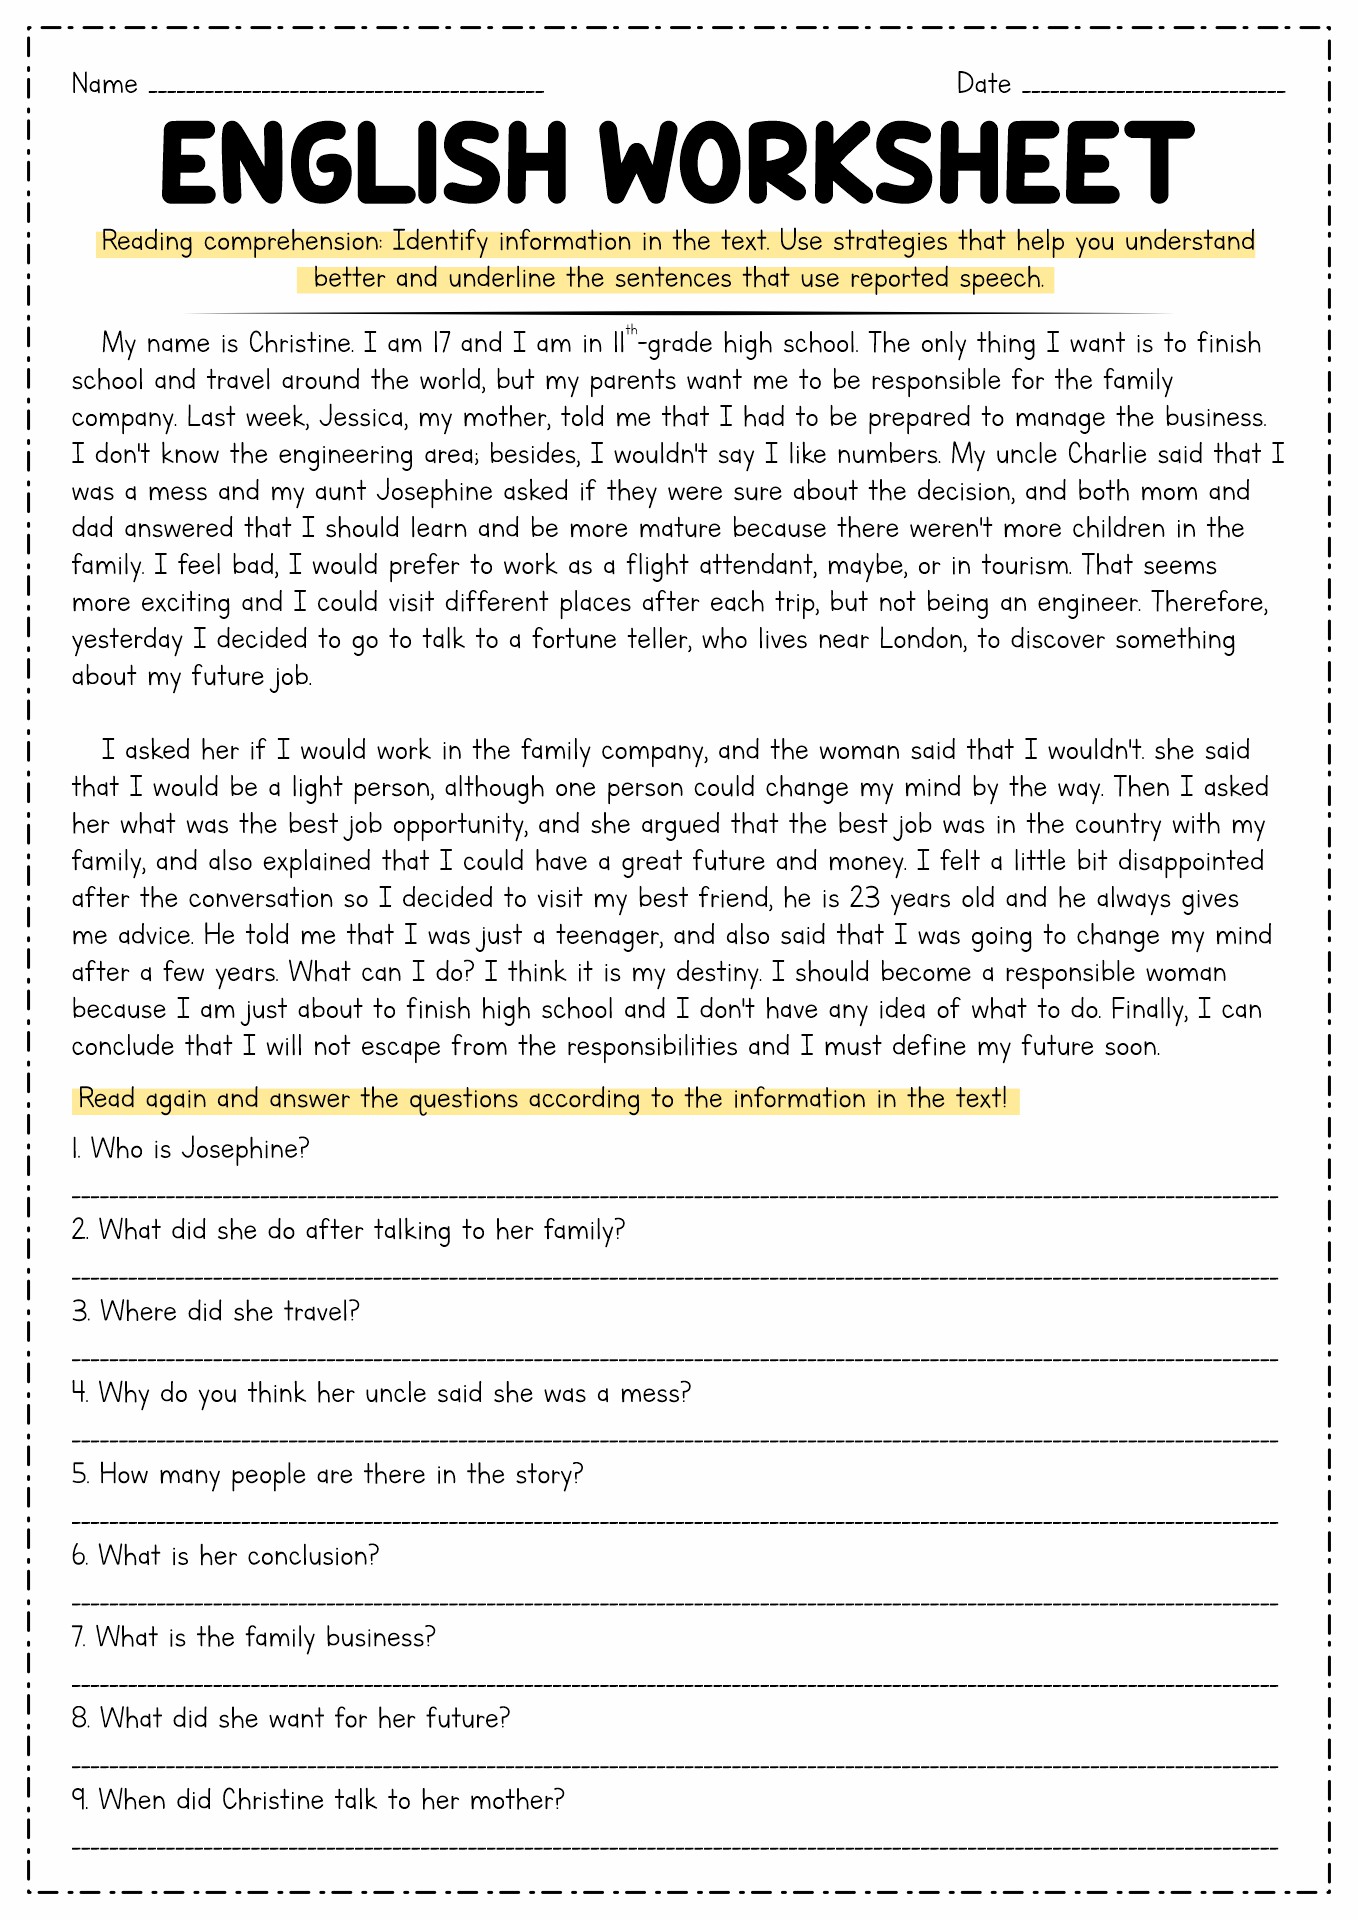 ten-commandments-preschool-coloring-page-coloring-page-blog